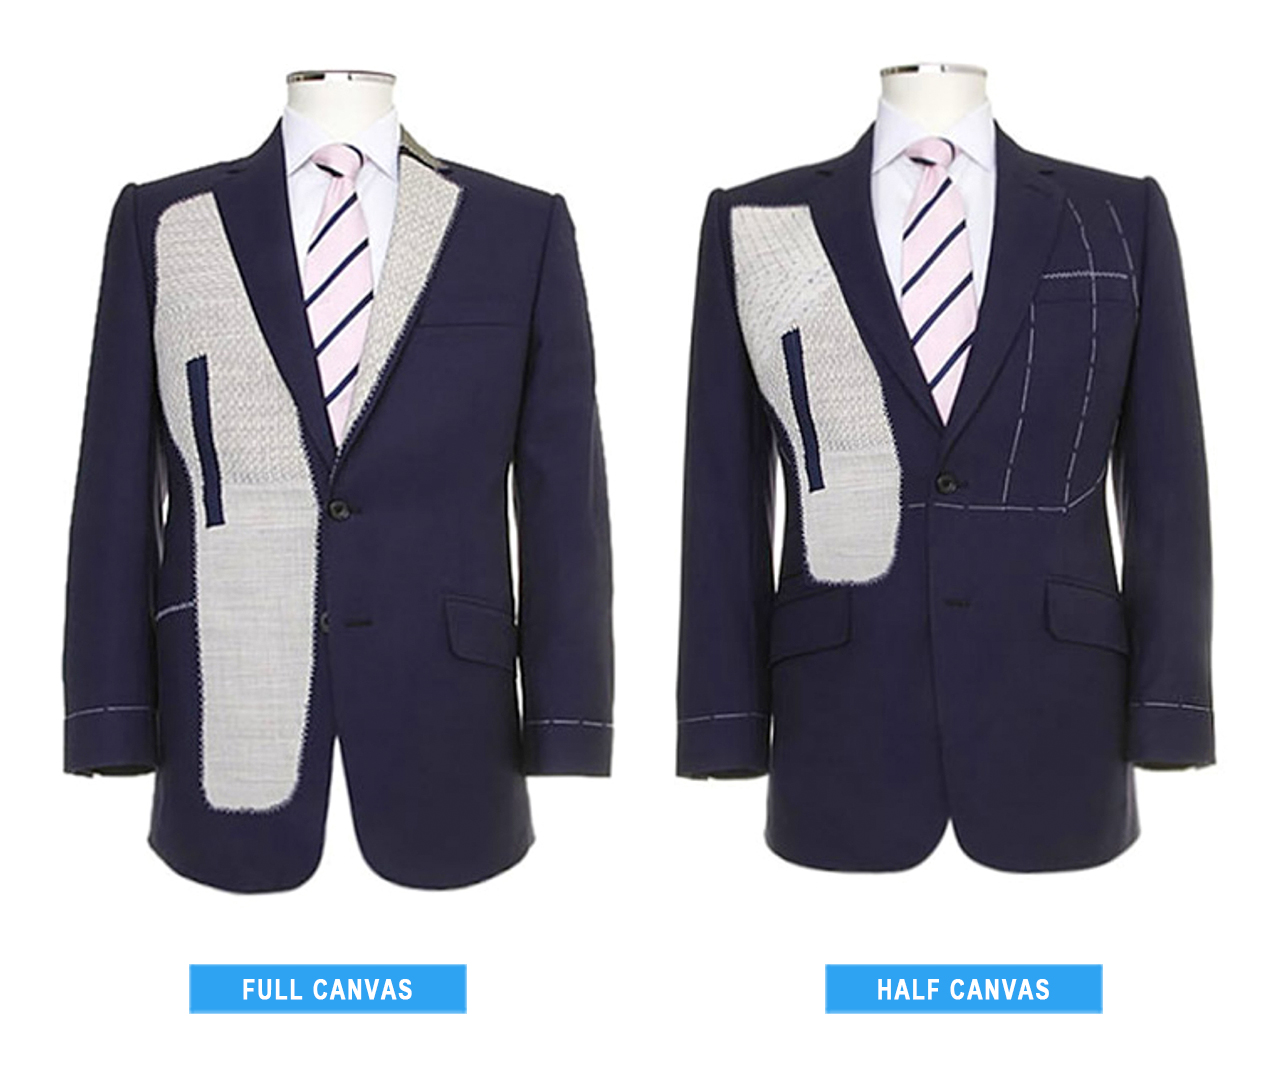 full canvas vs. half canvas suit jacket anatomy